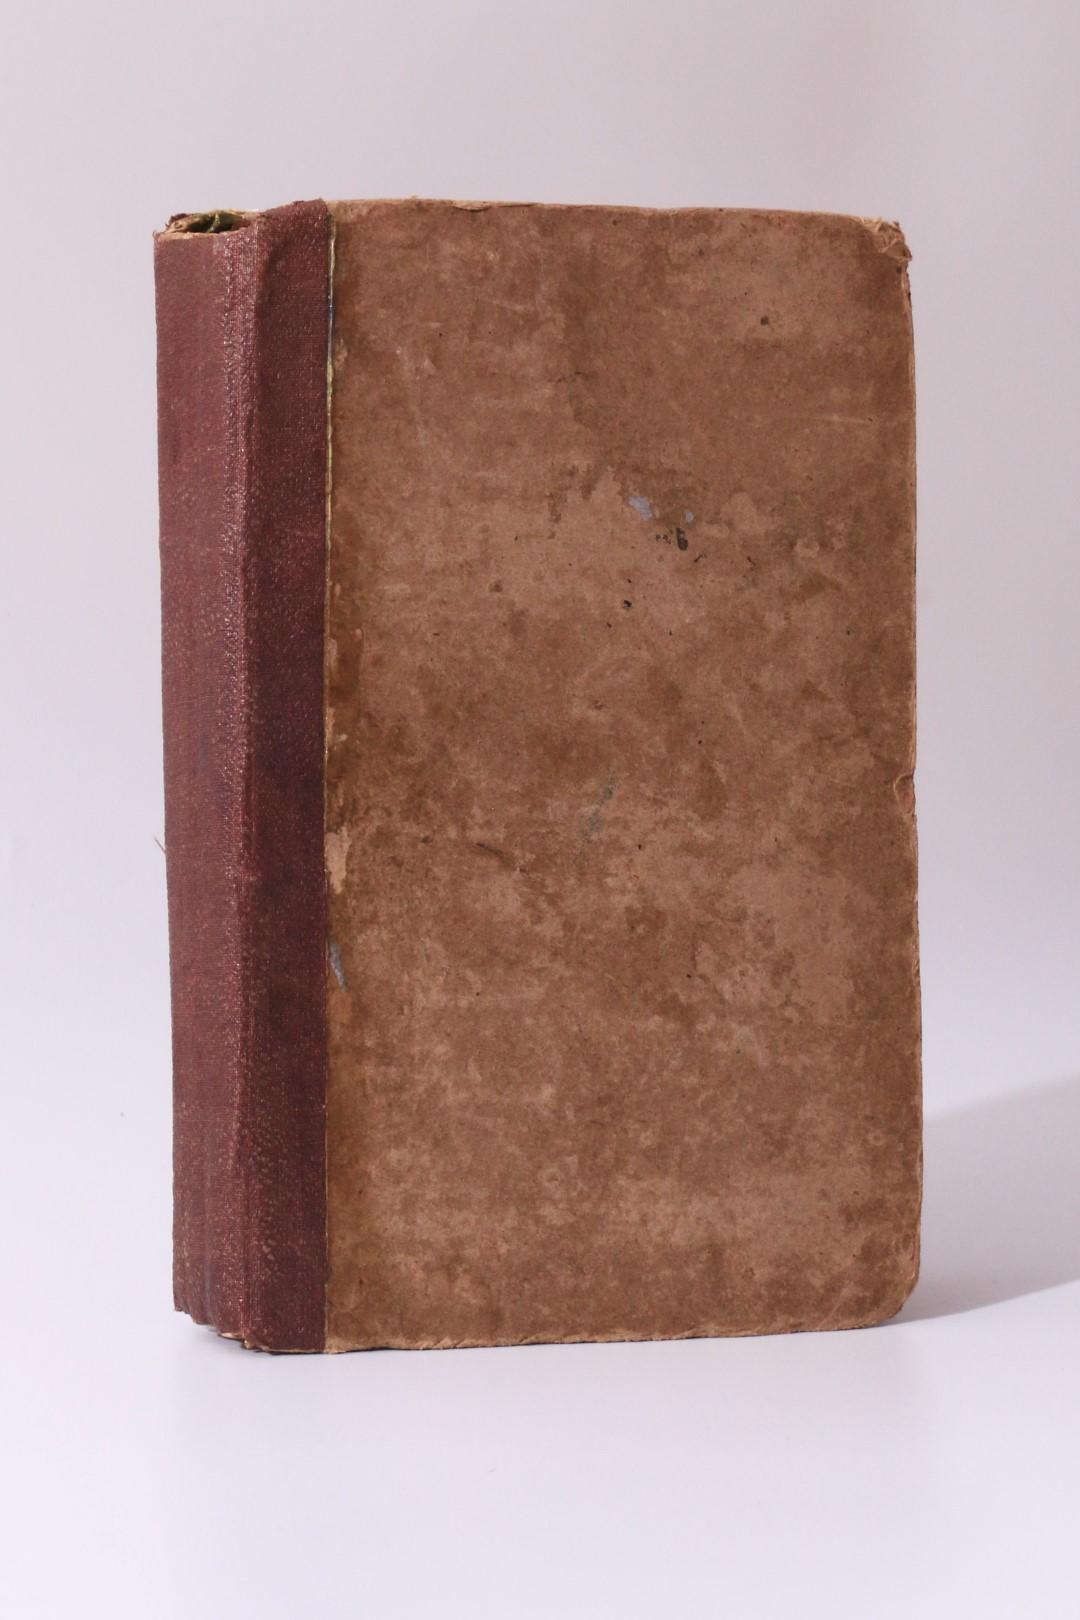 Jonathan Swift - A Tale of a Tub - Thomas Tegg, 1811, Later Edition.